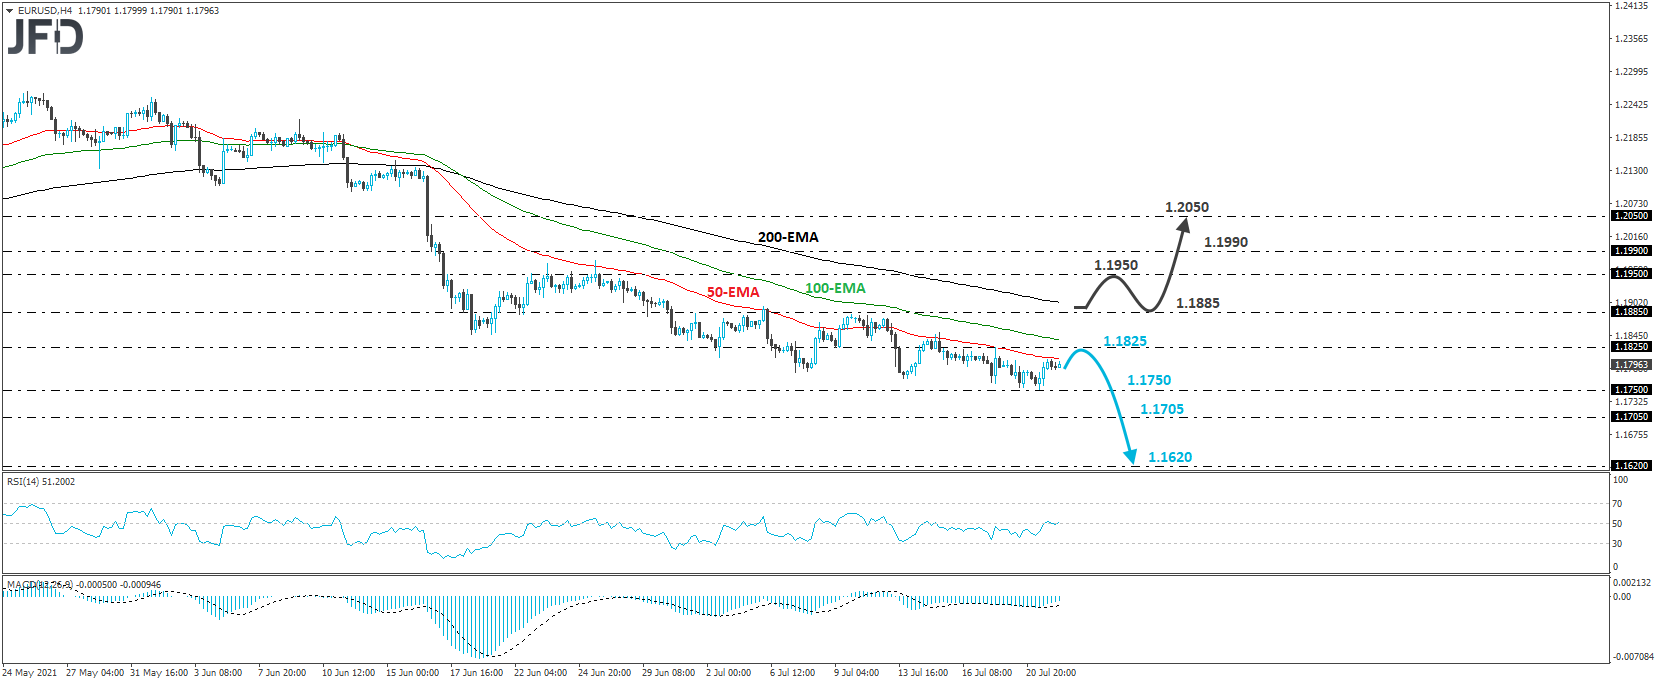 EUR/USD 4-hour chart technical analysis